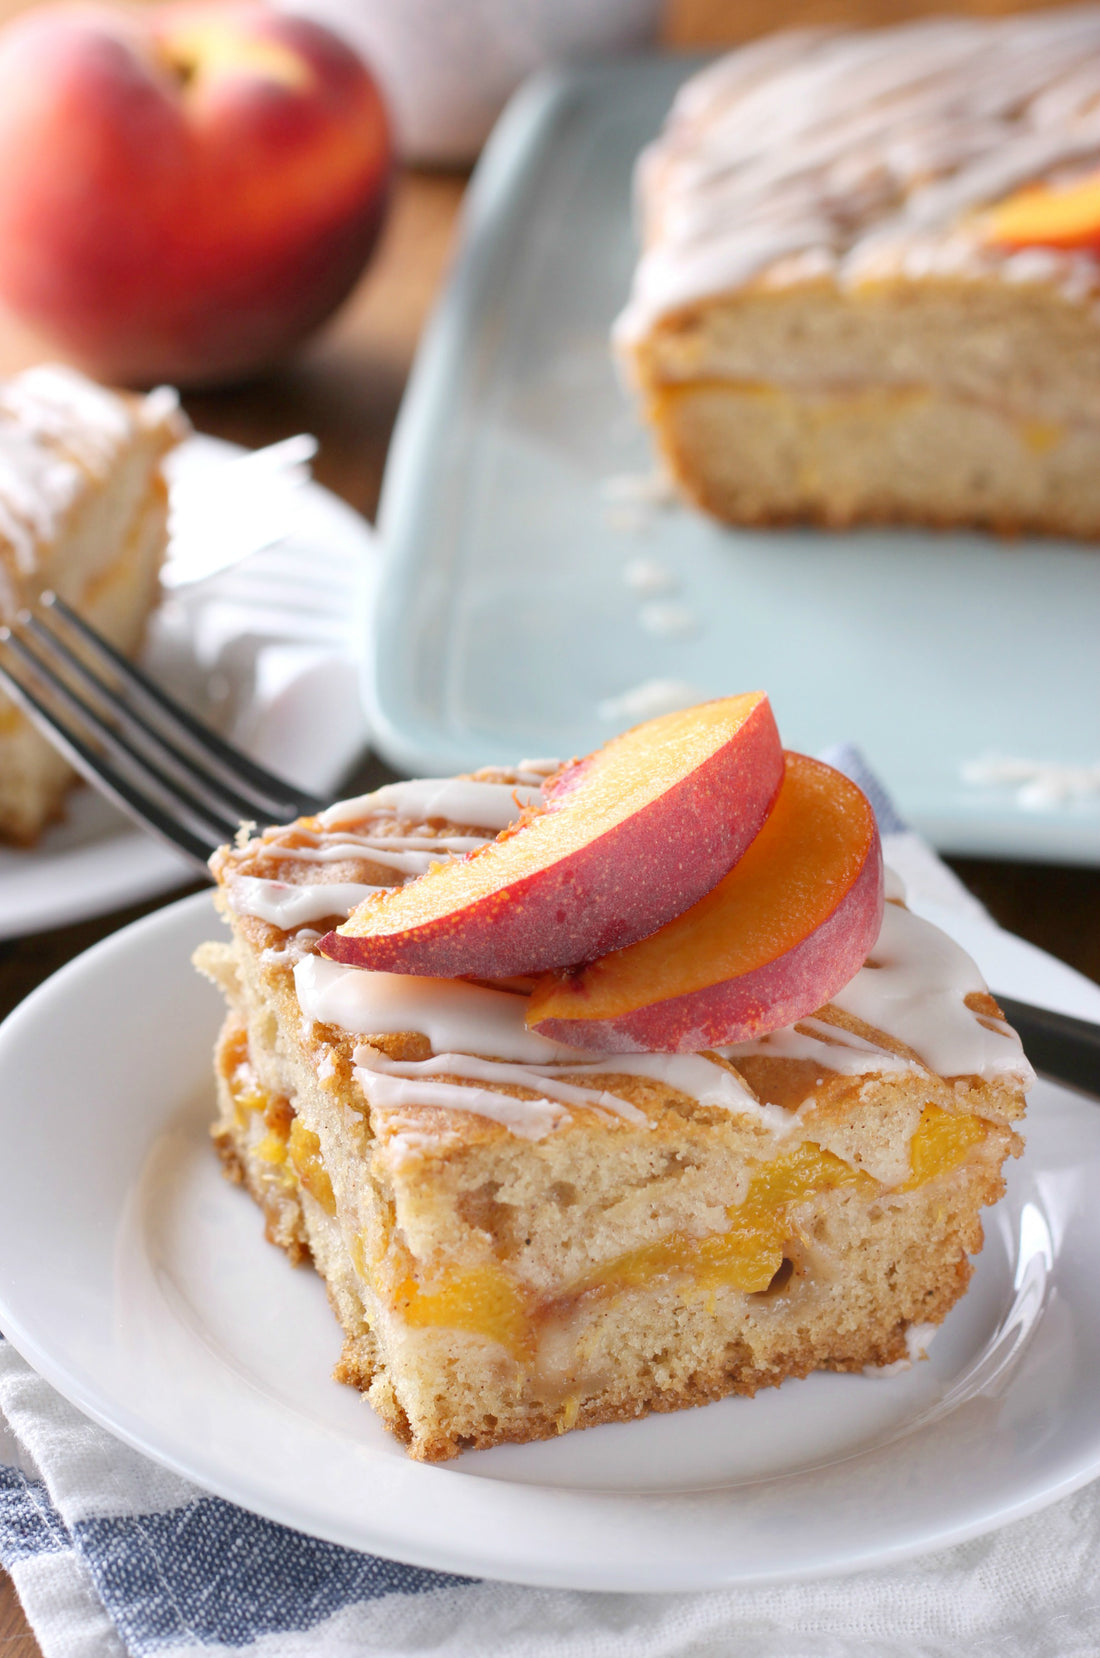 peaches-and-cream-cake-recipe-vert||Peach Desserts Perfect For Summer (Recipes)||Peach Desserts Perfect For Summer (Recipes)||Delish Peach Roses||Peach Cookies